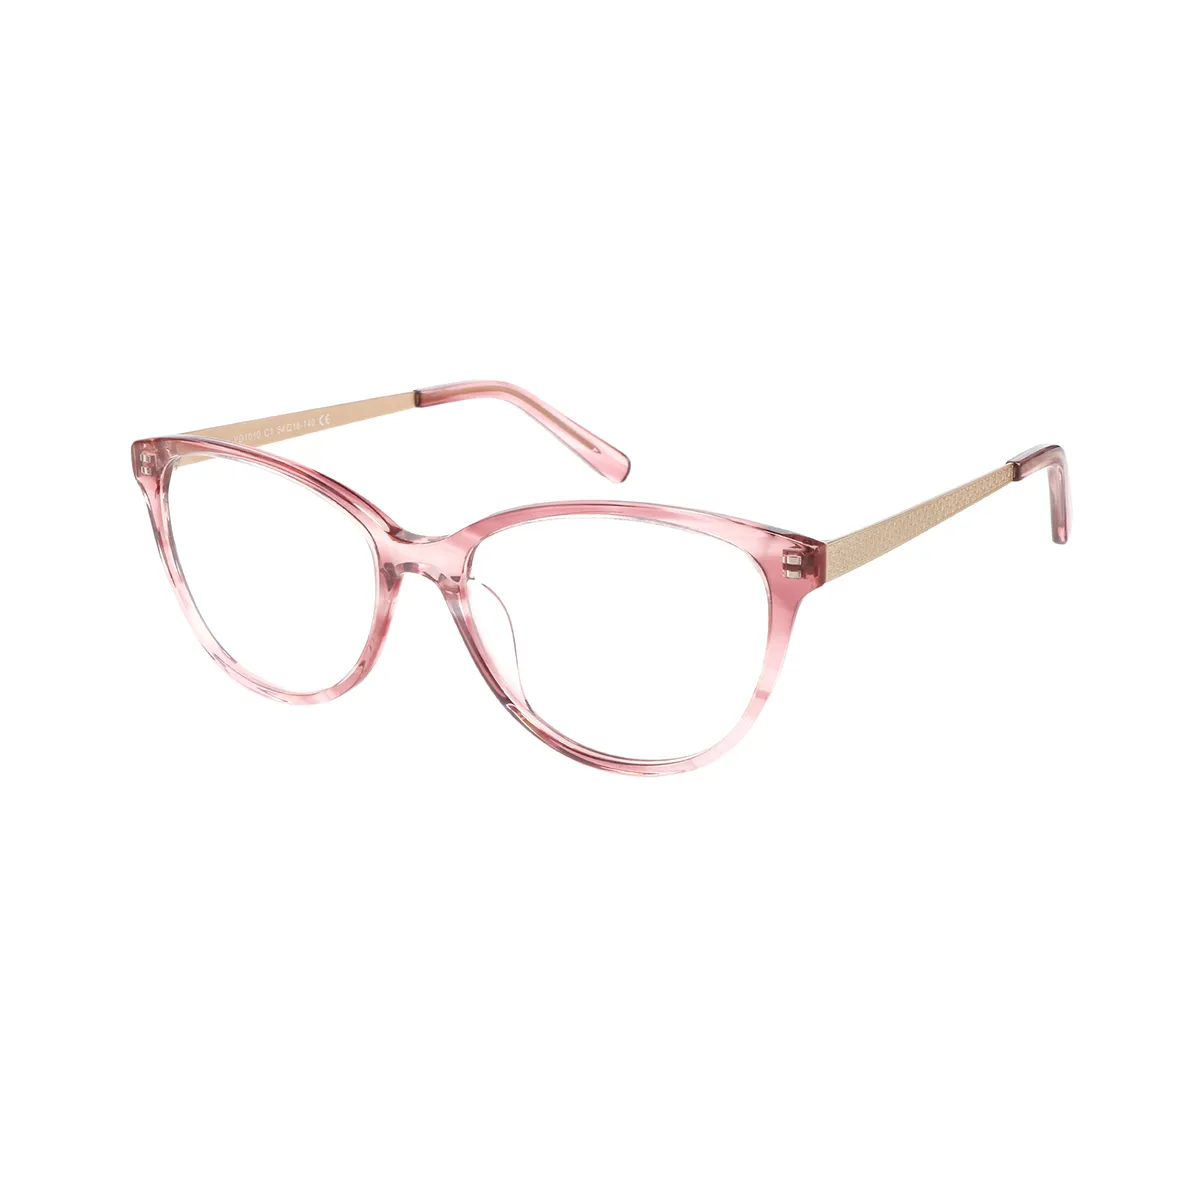 Fashion Oval Brown Eyeglasses for Women